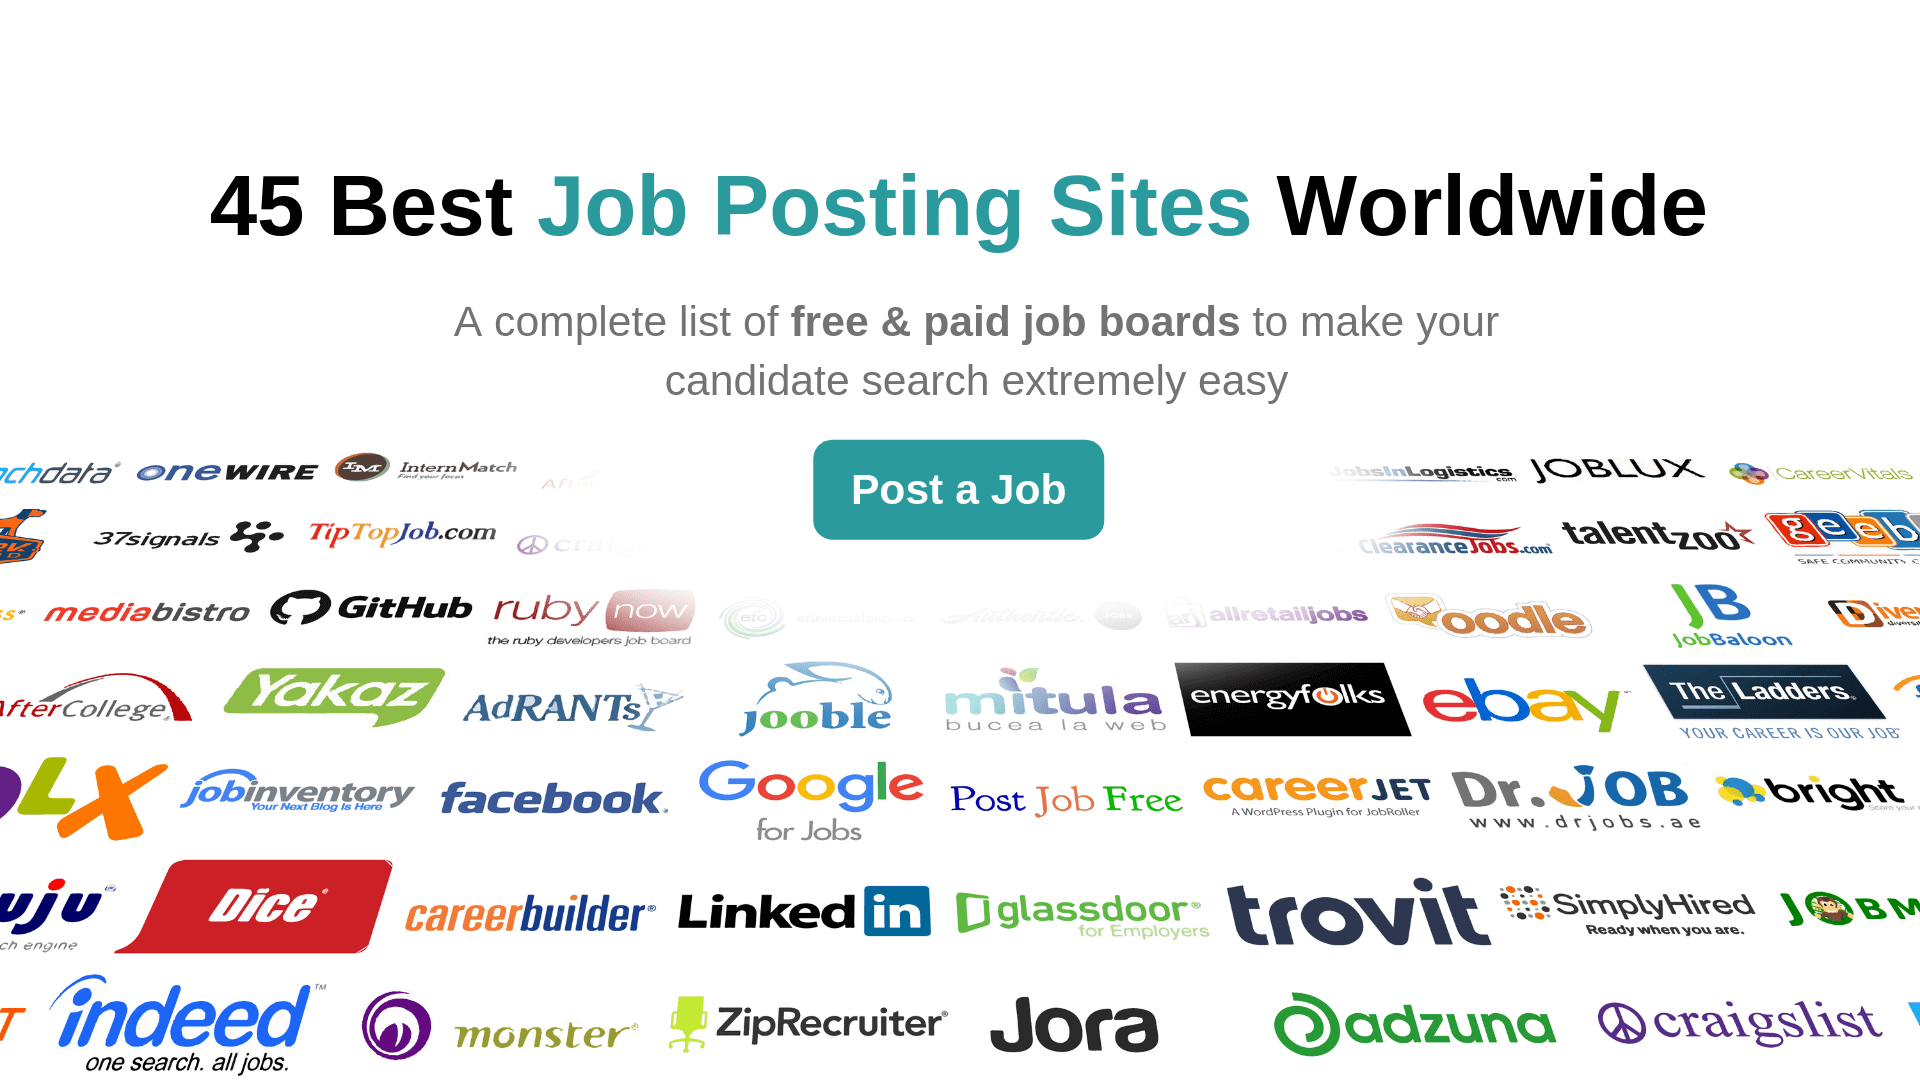 Best job posting sites, free top job boards. how to post a job, where to post jobs.
US job boards, European job boards, Australian job posting sites. List of job boards. List of job posting sites.